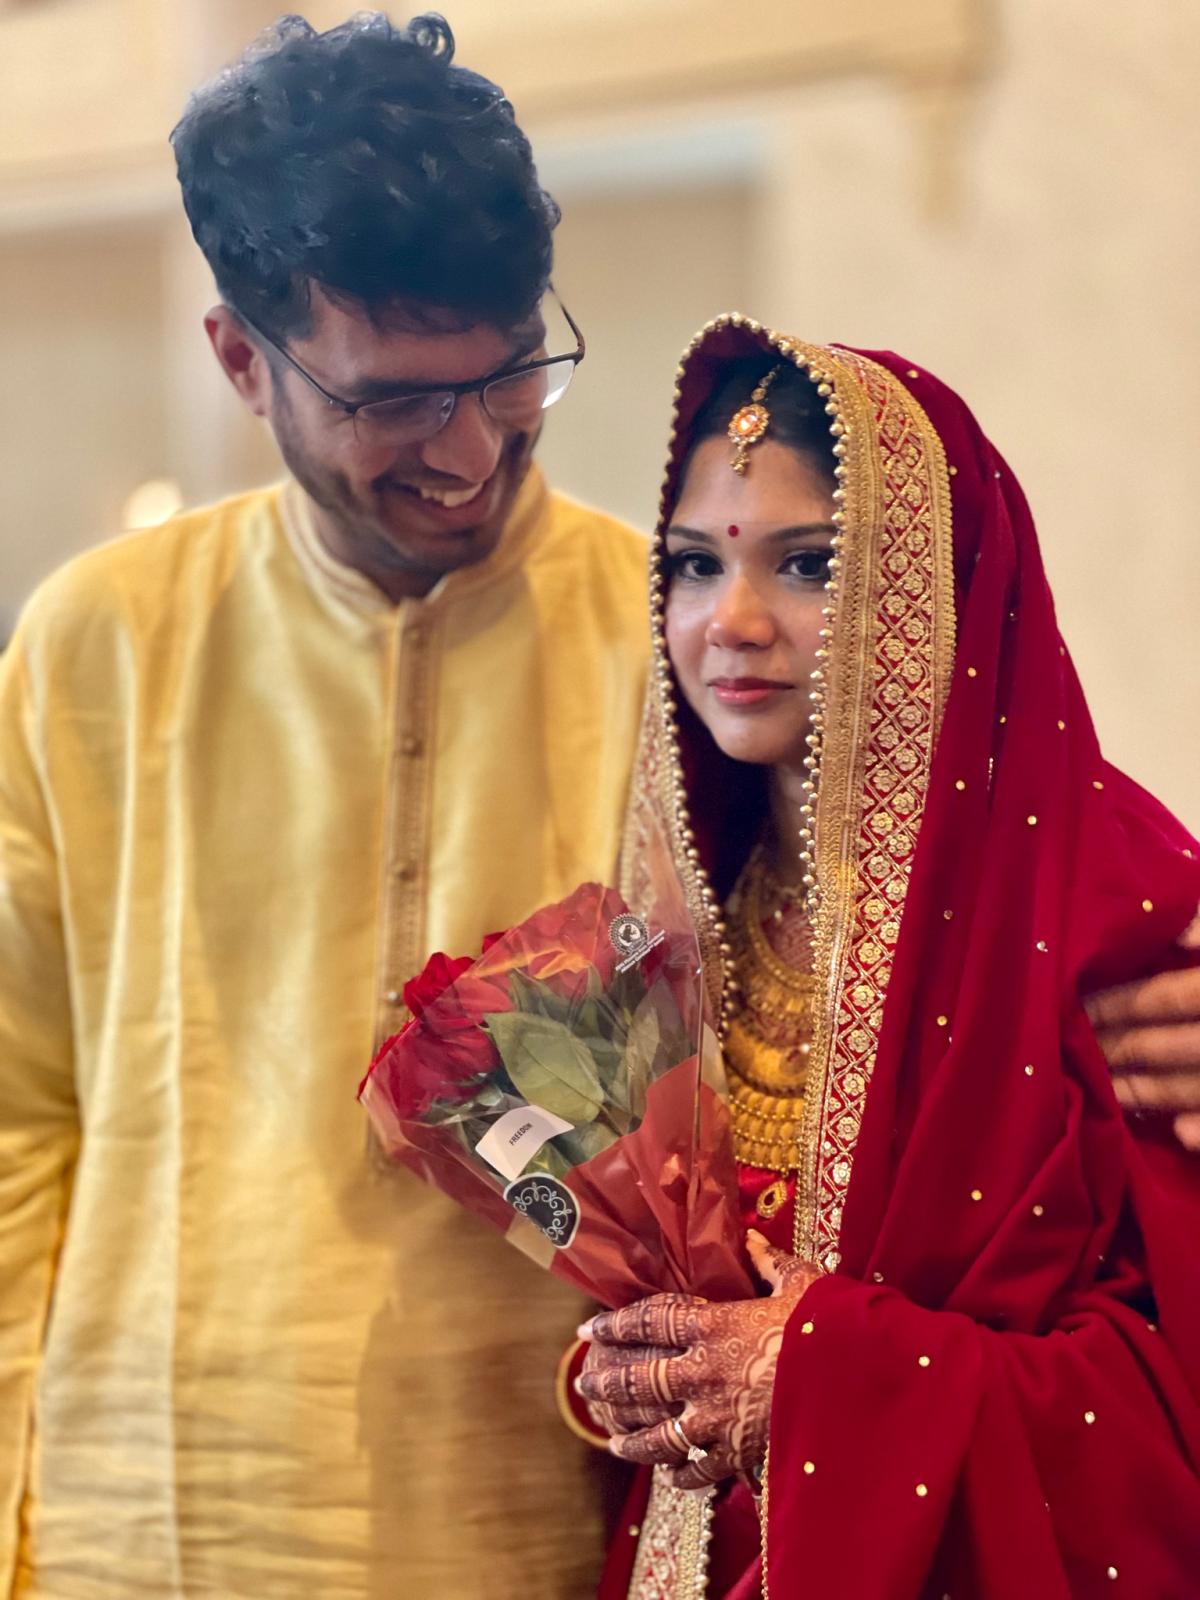  Al-Hussaini and Farlin on their wedding day.